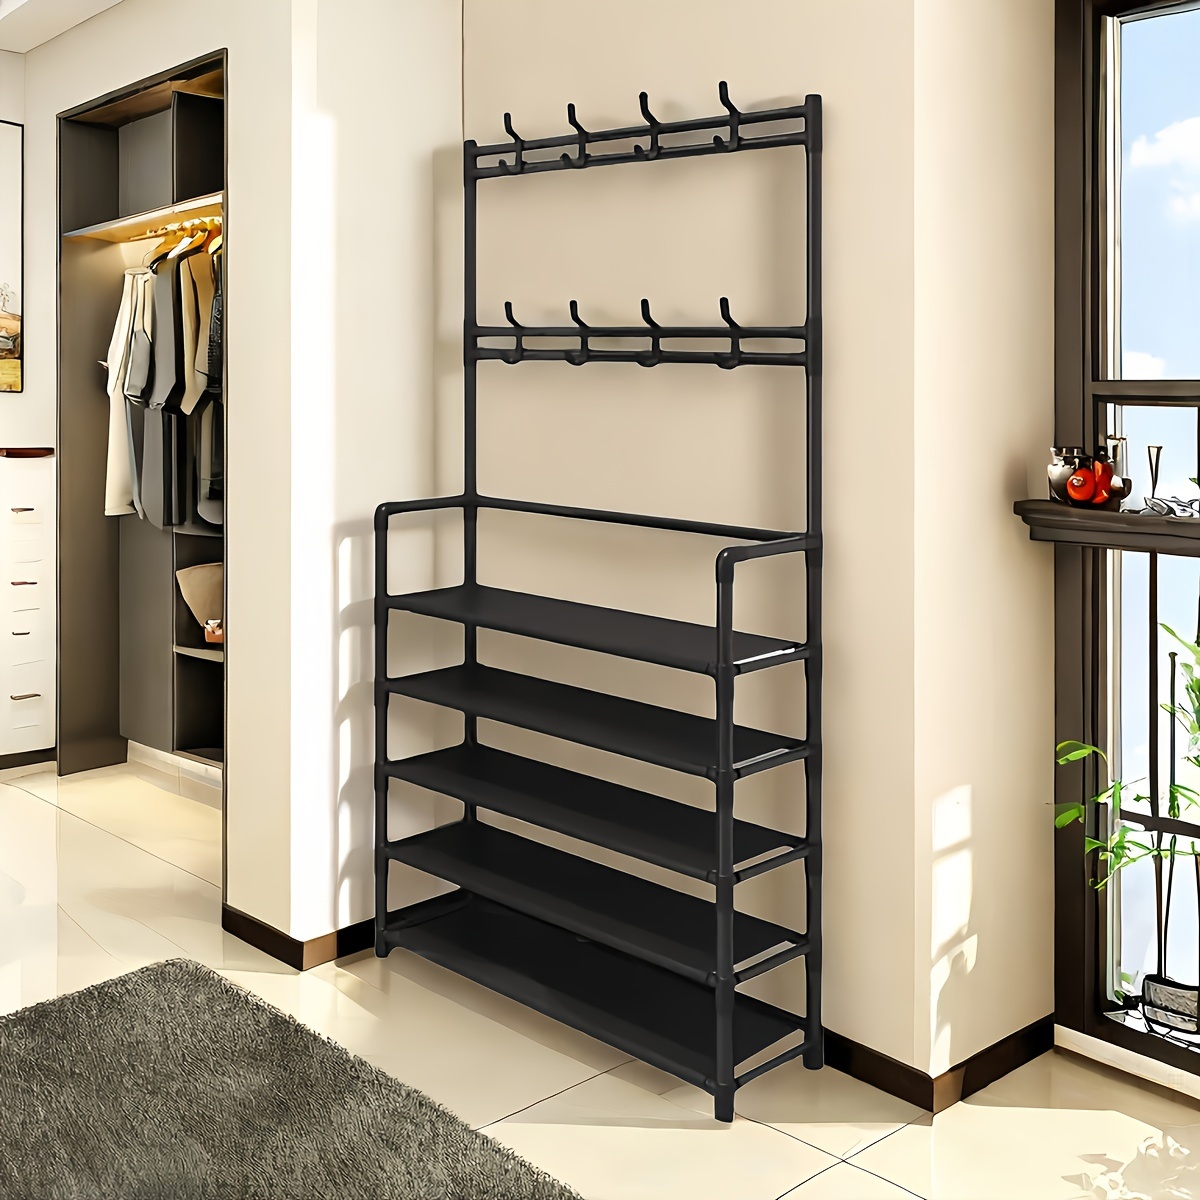 

Versatile 4/5-tier Metal Coat Rack With Shoe Storage - Freestanding, Multi-functional Organizer For Entryway, Living Room, Bathroom, Hallway - Includes 8 Dual Hooks, Black & White Options